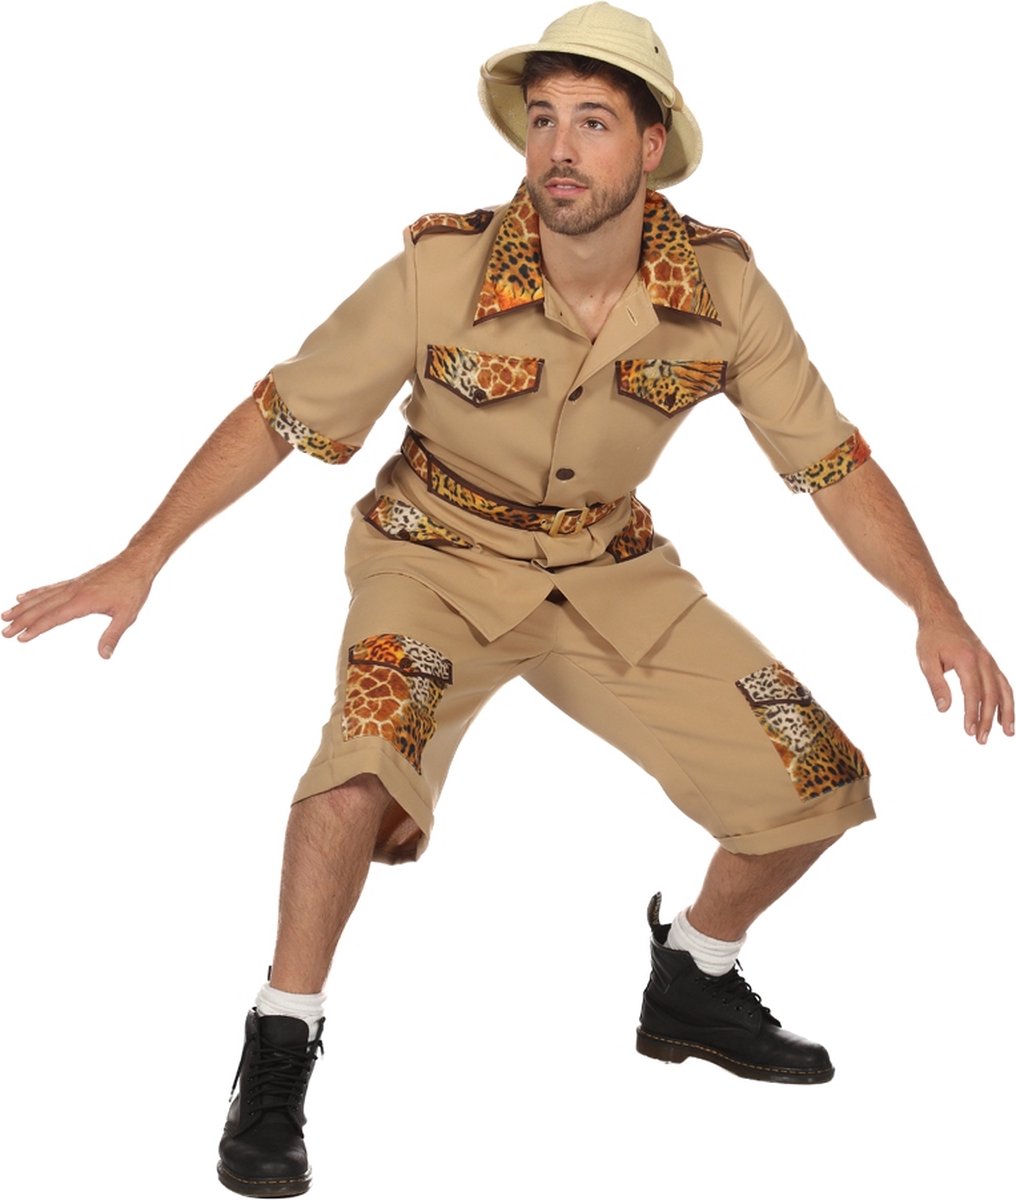 Wilbers - Jungle & Afrika Kostuum - De Jungle Slaapt Nooit Safari - Man - wit / beige - Maat 52 - Carnavalskleding - Verkleedkleding